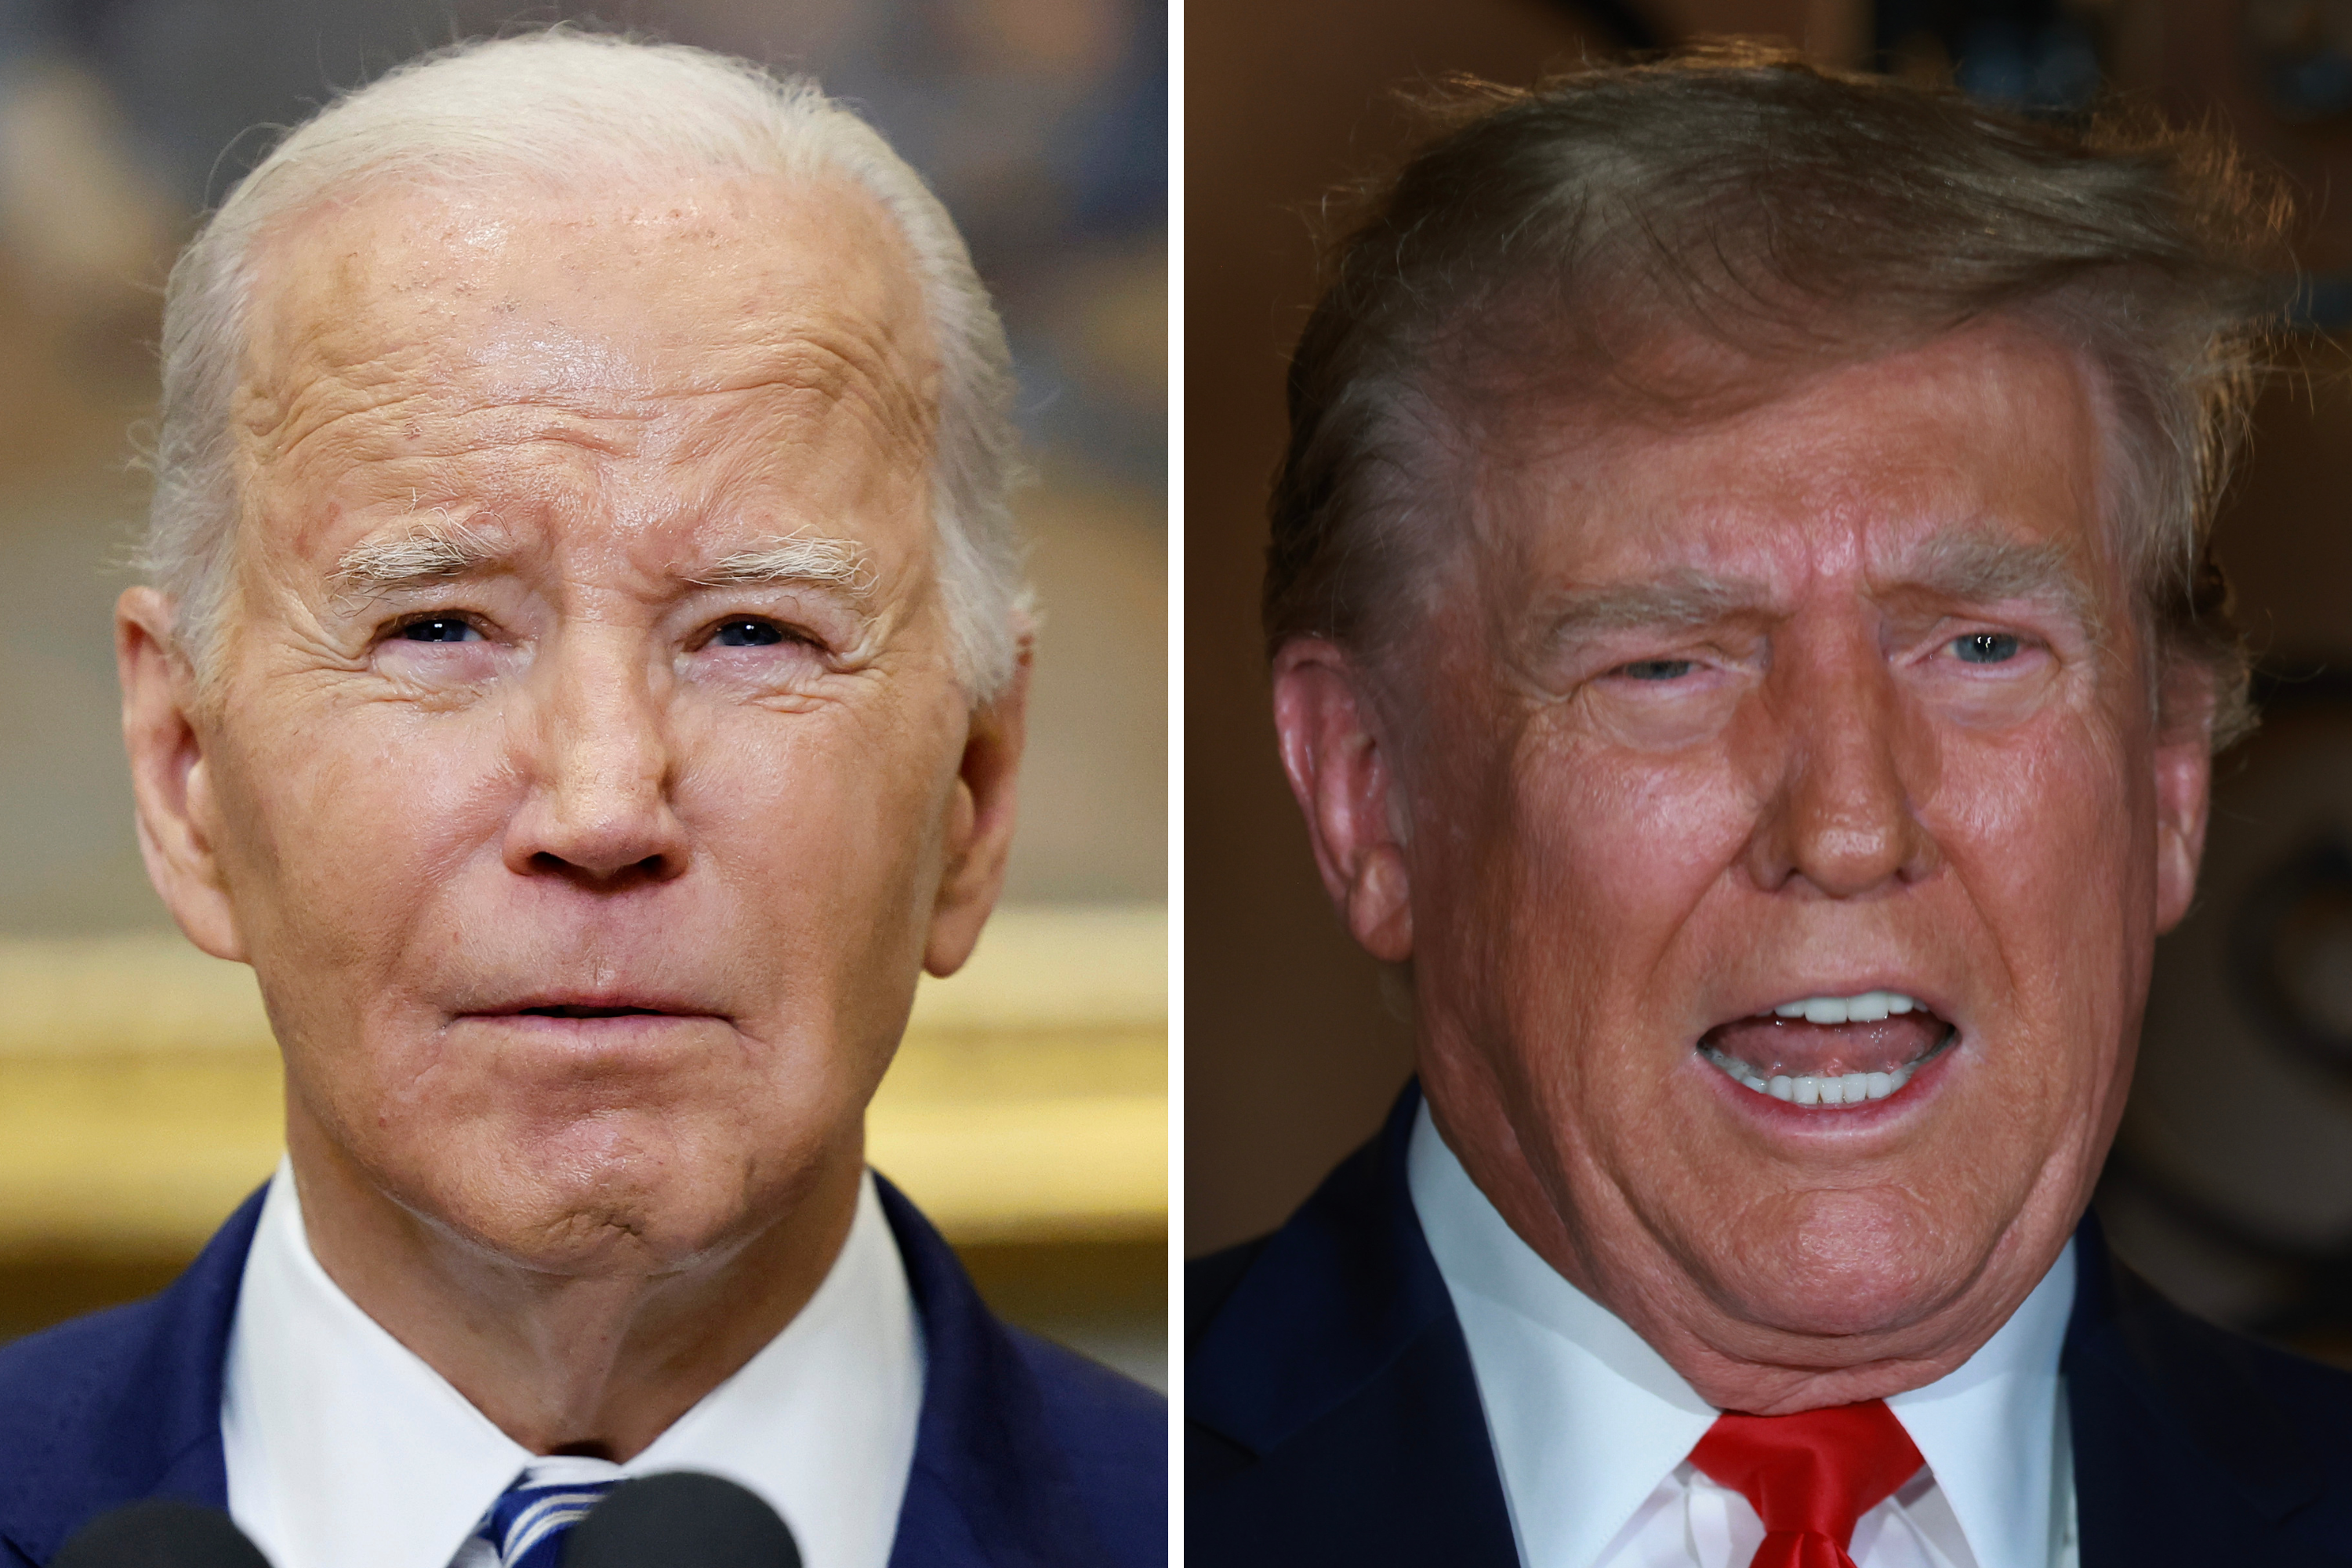 Biden campaign slams Trump for ranking last in “presidential greatness”